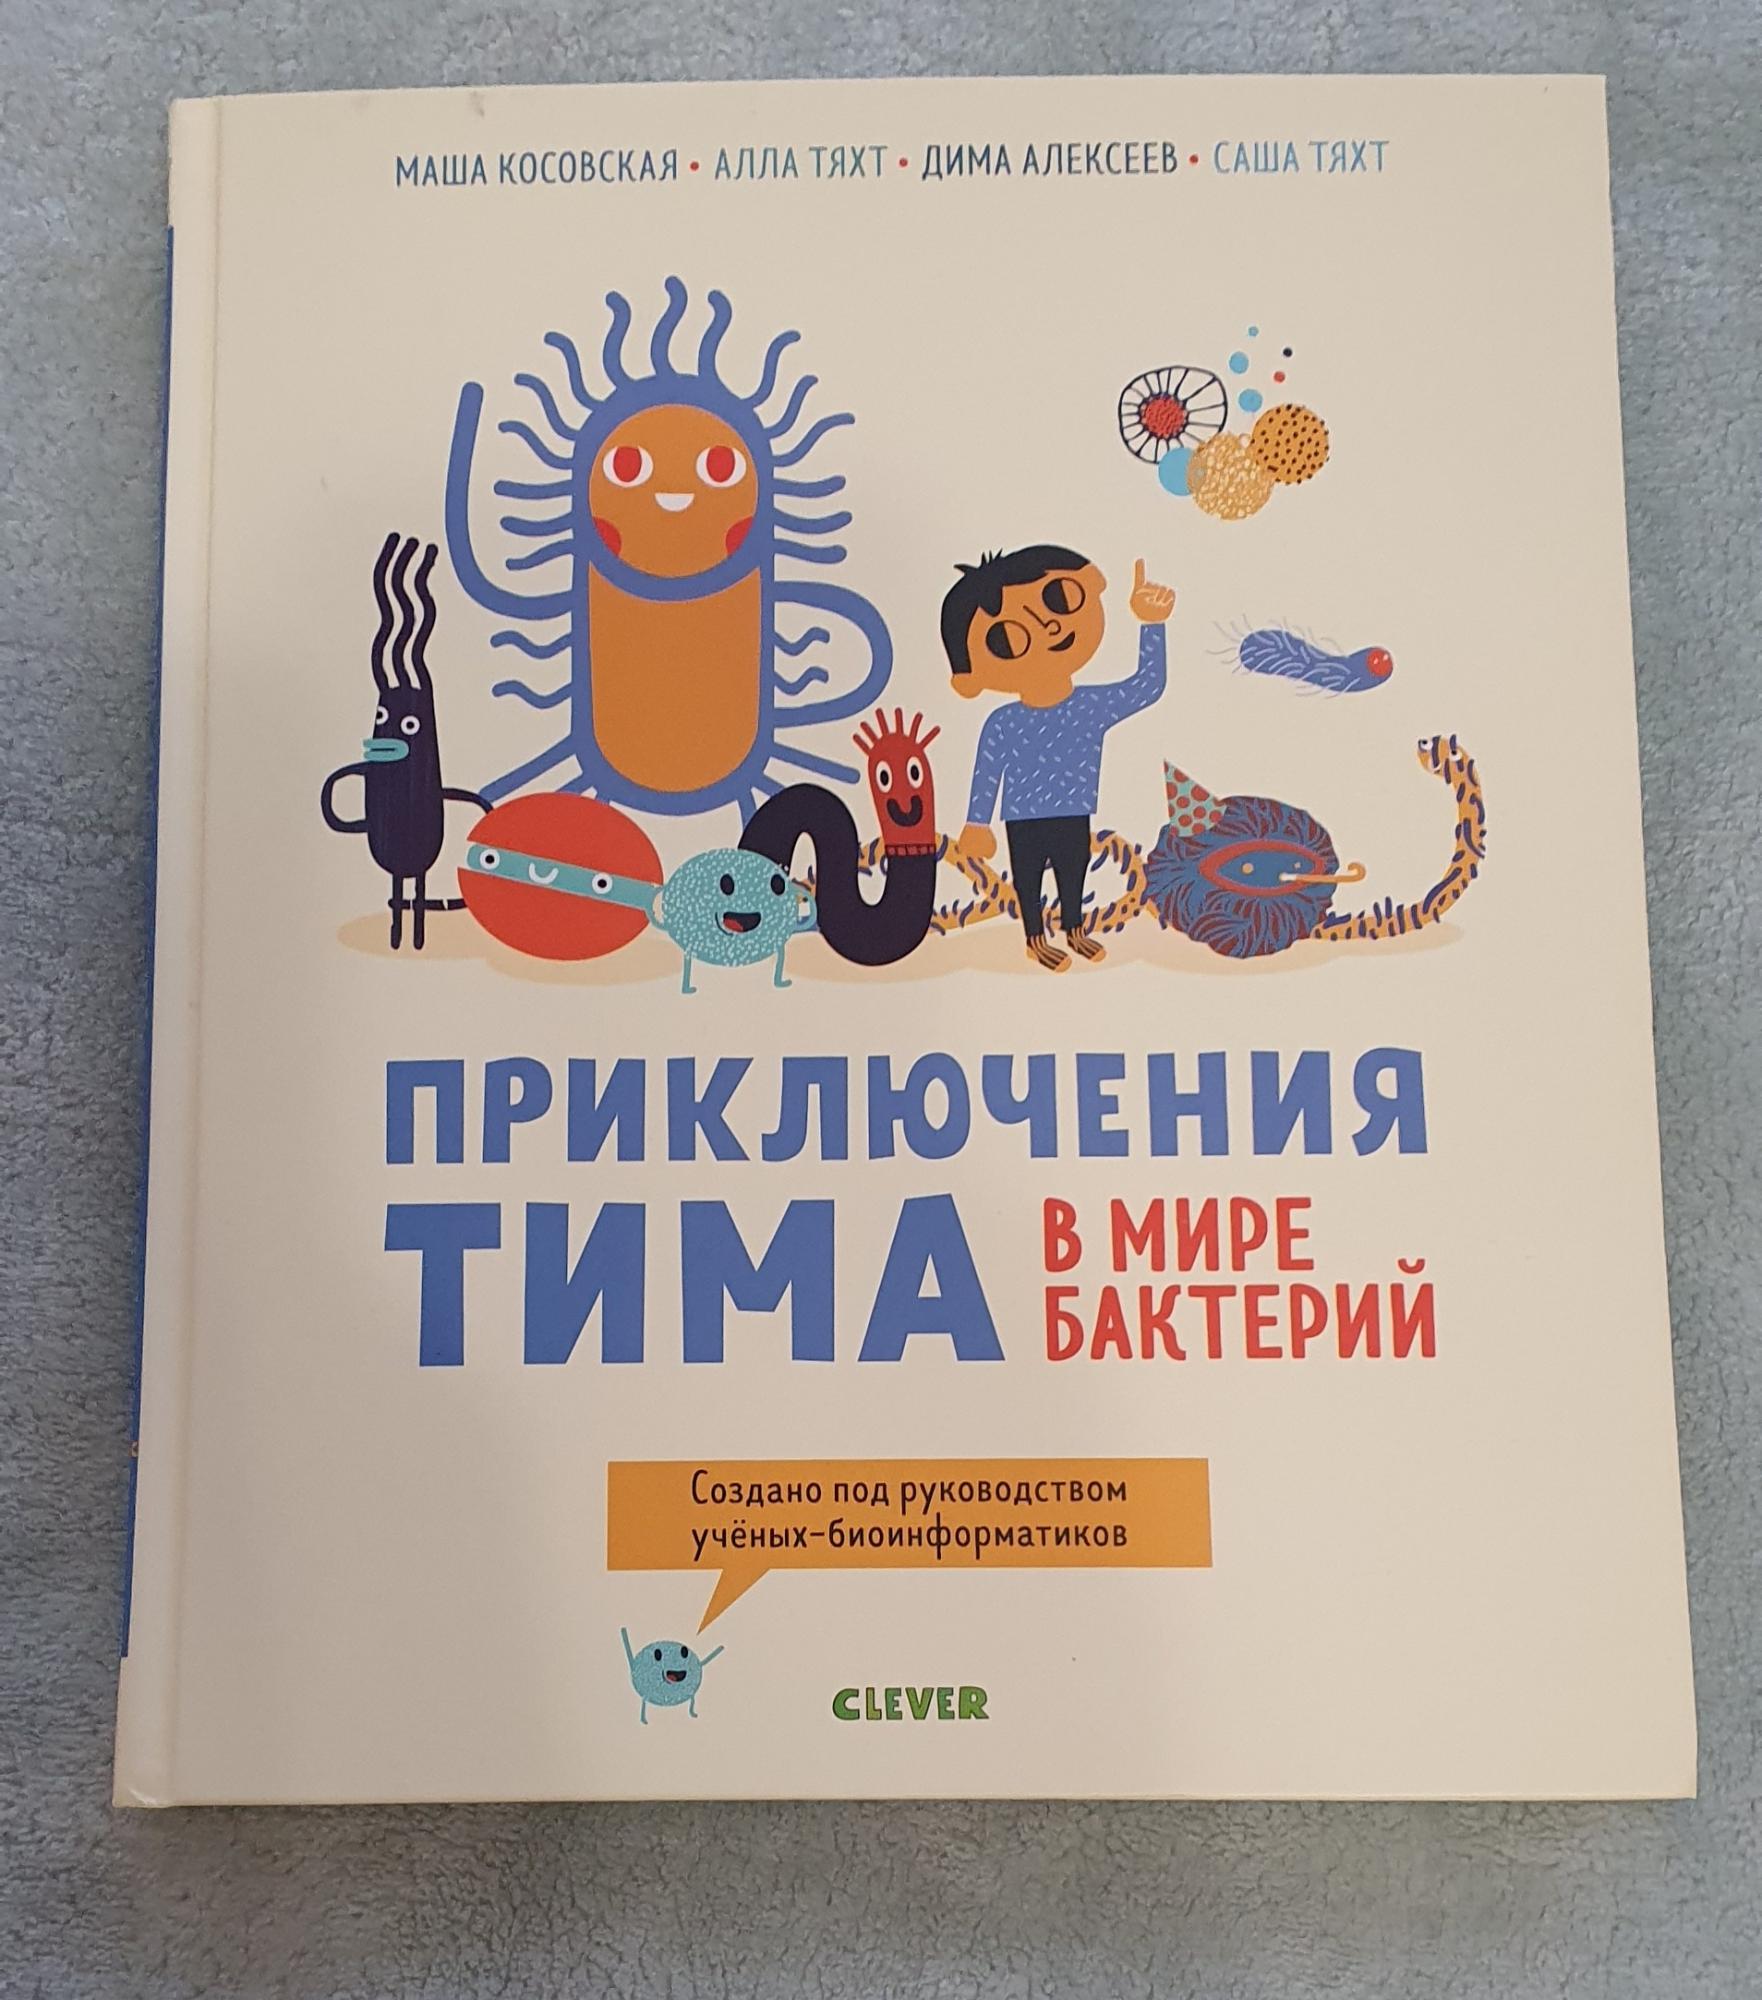 Книга приключения Тима в мире бактерий. Путешествие Тима в мире бактерий. Тим в мире бактерий книга.